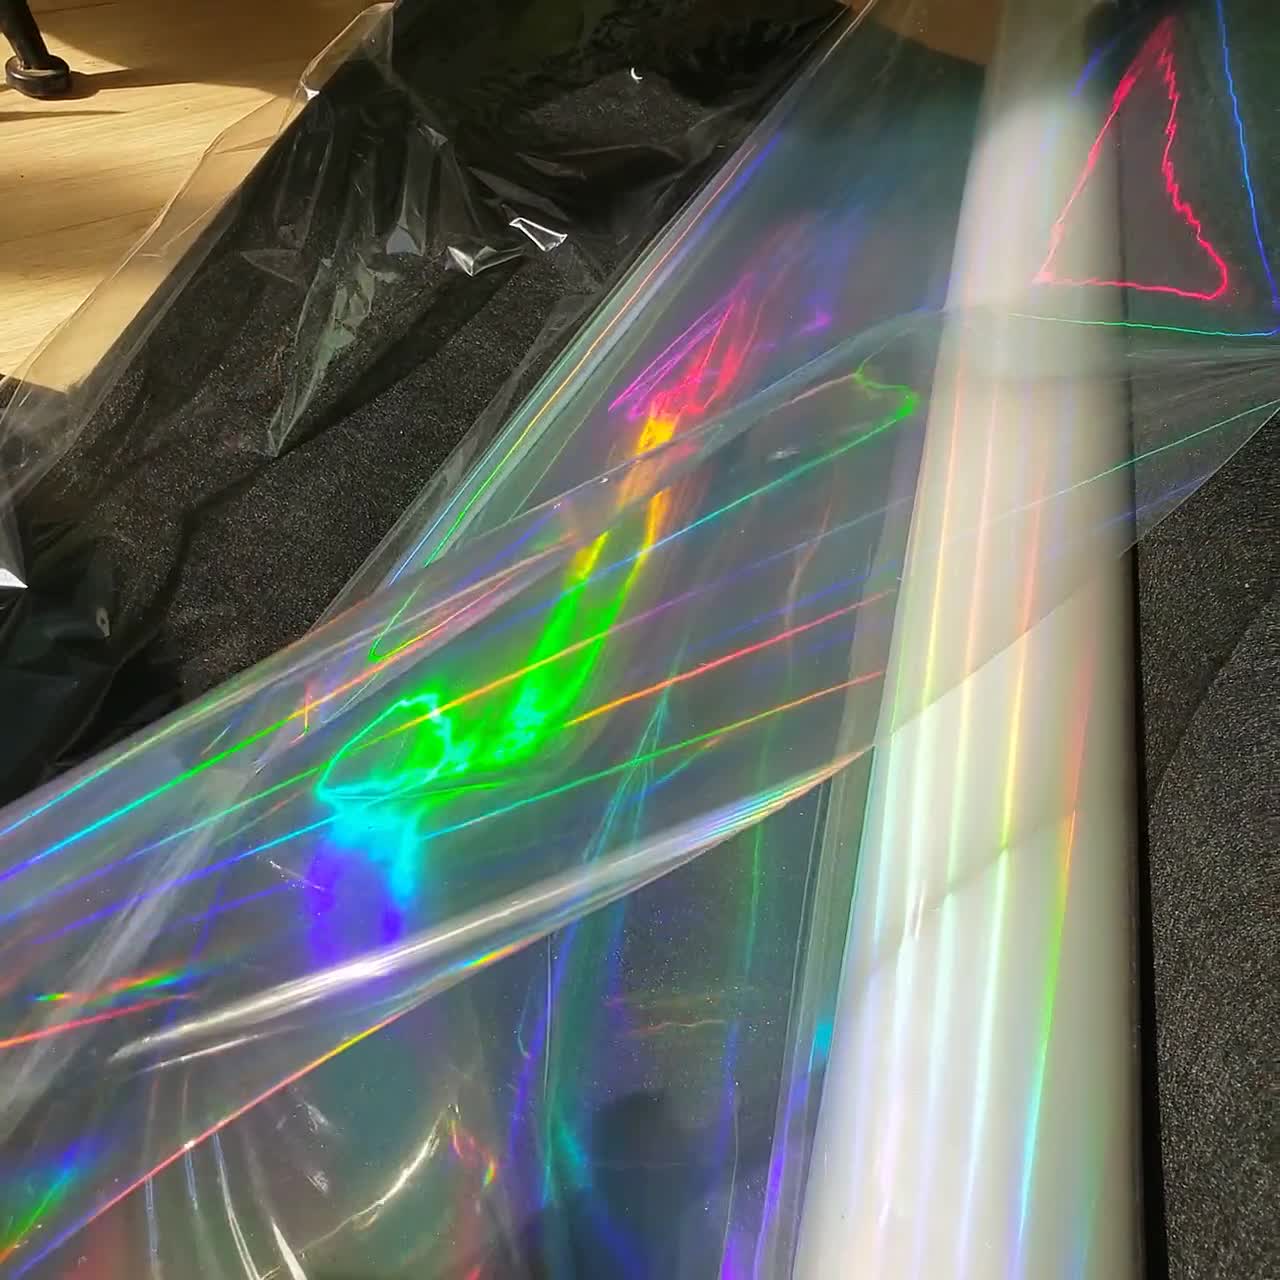 Wholesale GORGECRAFT PVC Holographic Sheet Transparent Iridescent